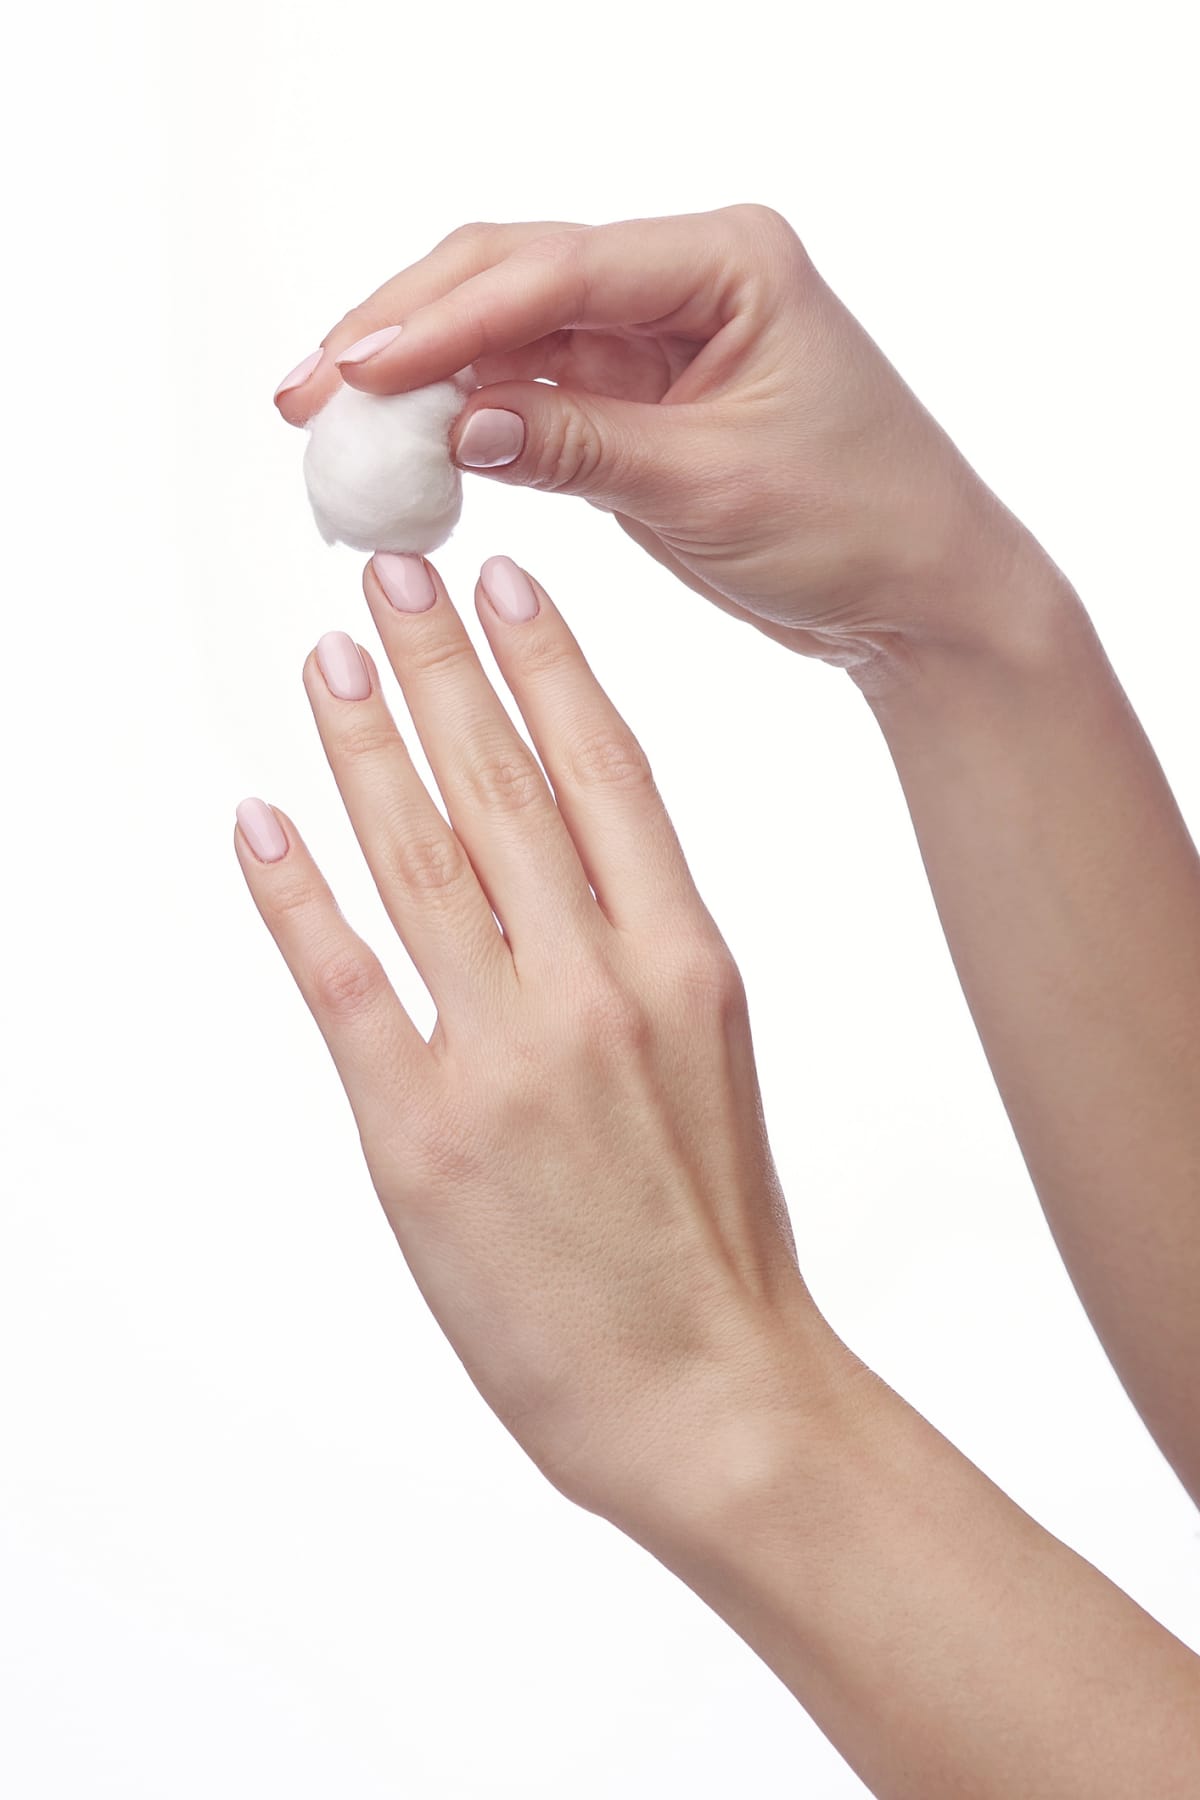 Acetone & Acetate – Damaging your nails – HipHop Skincare